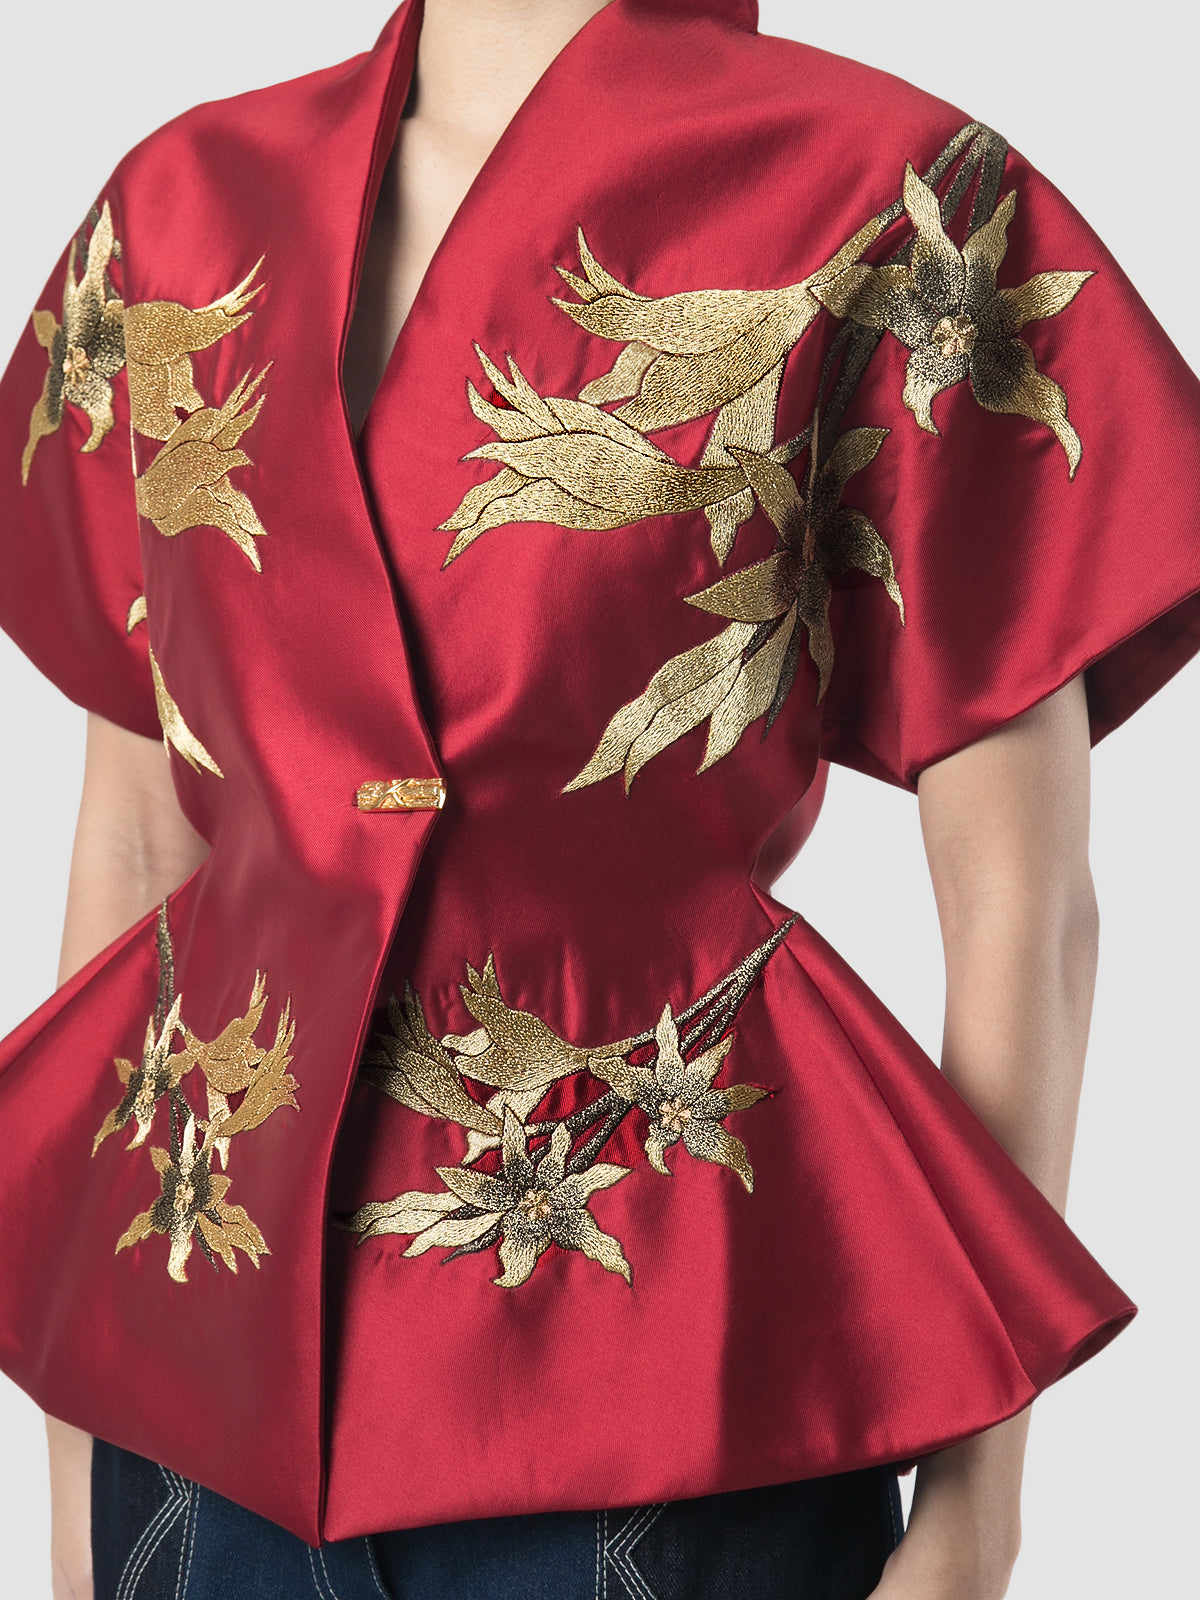 Signature Kimono w/Peplum And Embroidery In Red